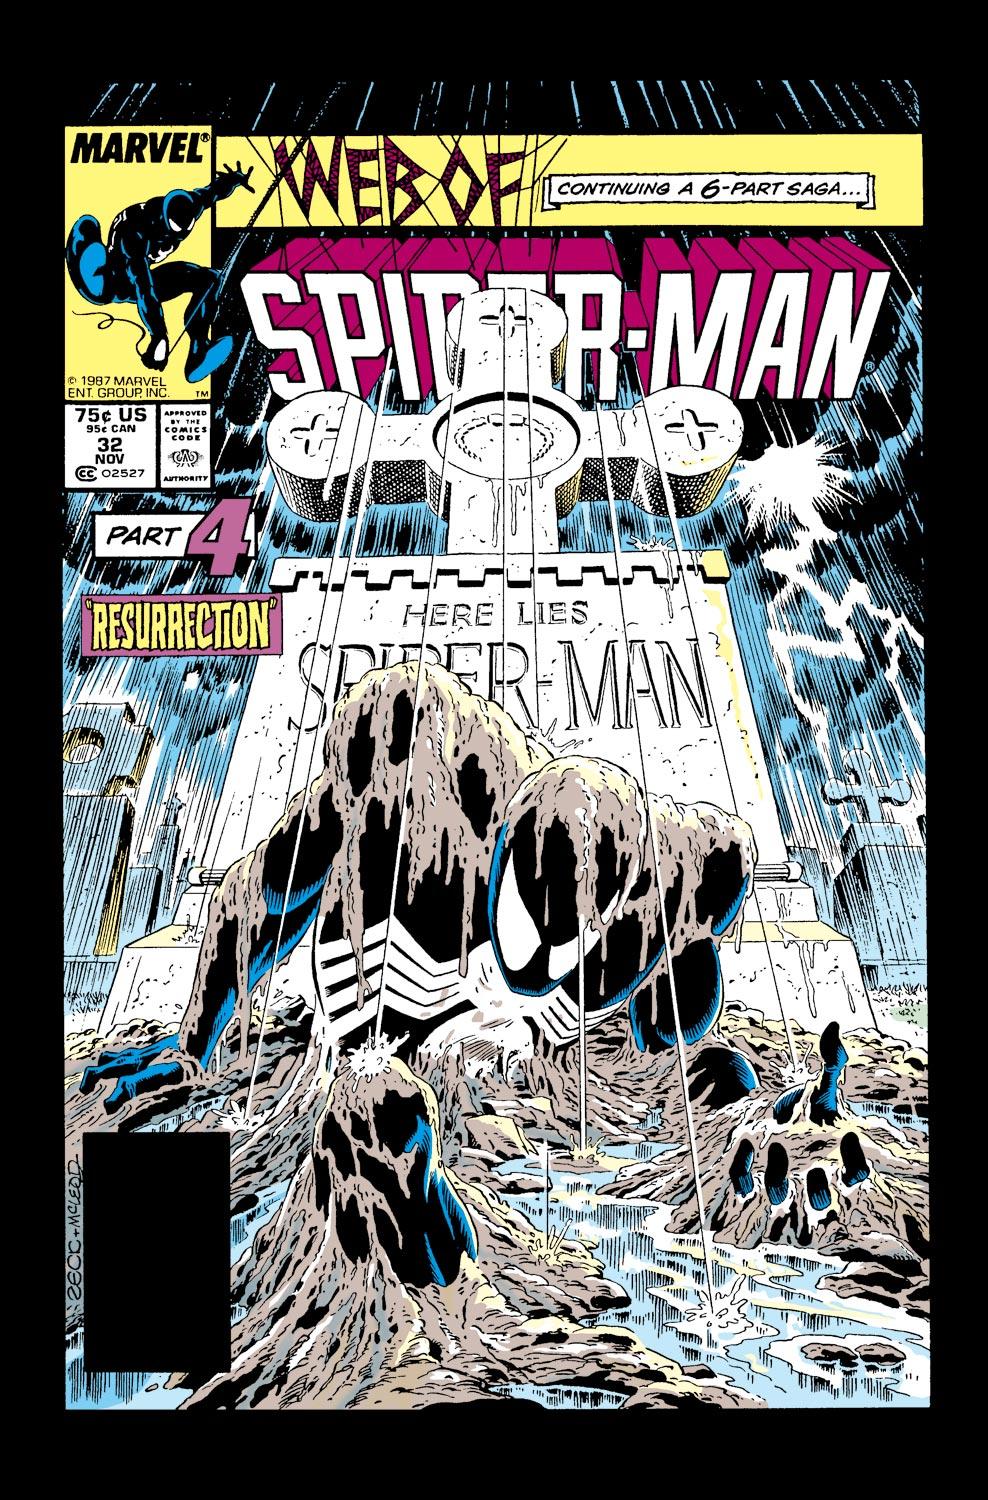 Web of spider-man #32